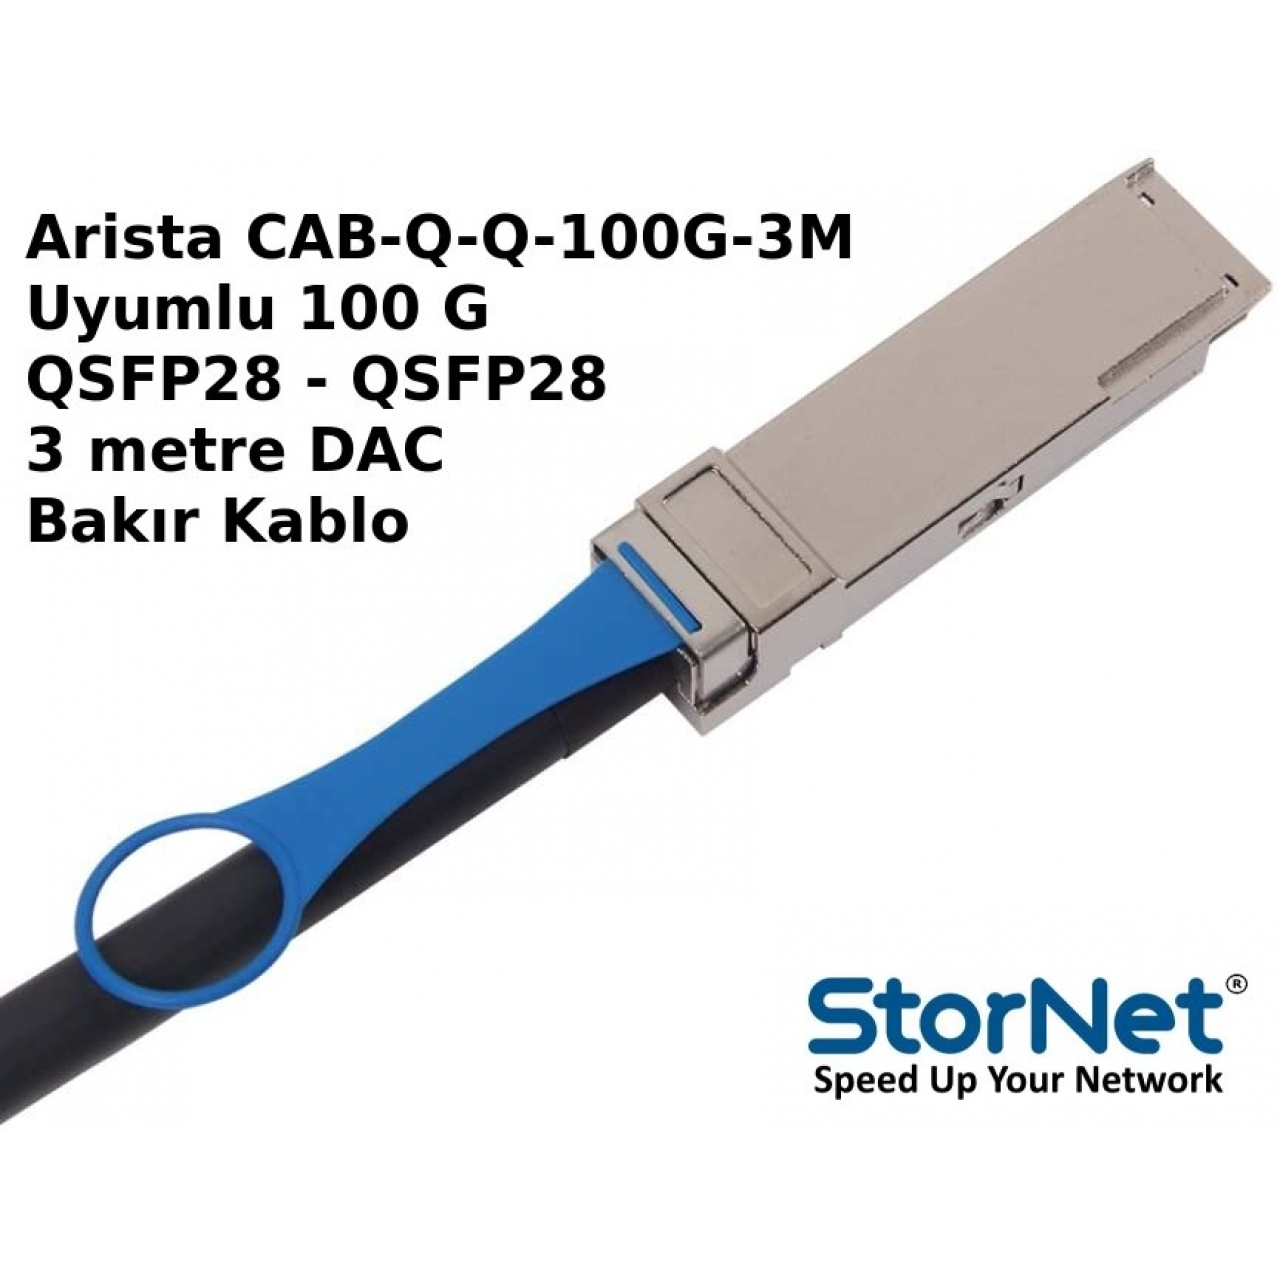 DAC Kablo Arista CAB-Q-Q-100G-3M uyumlu 100G QSFP28 3 metre